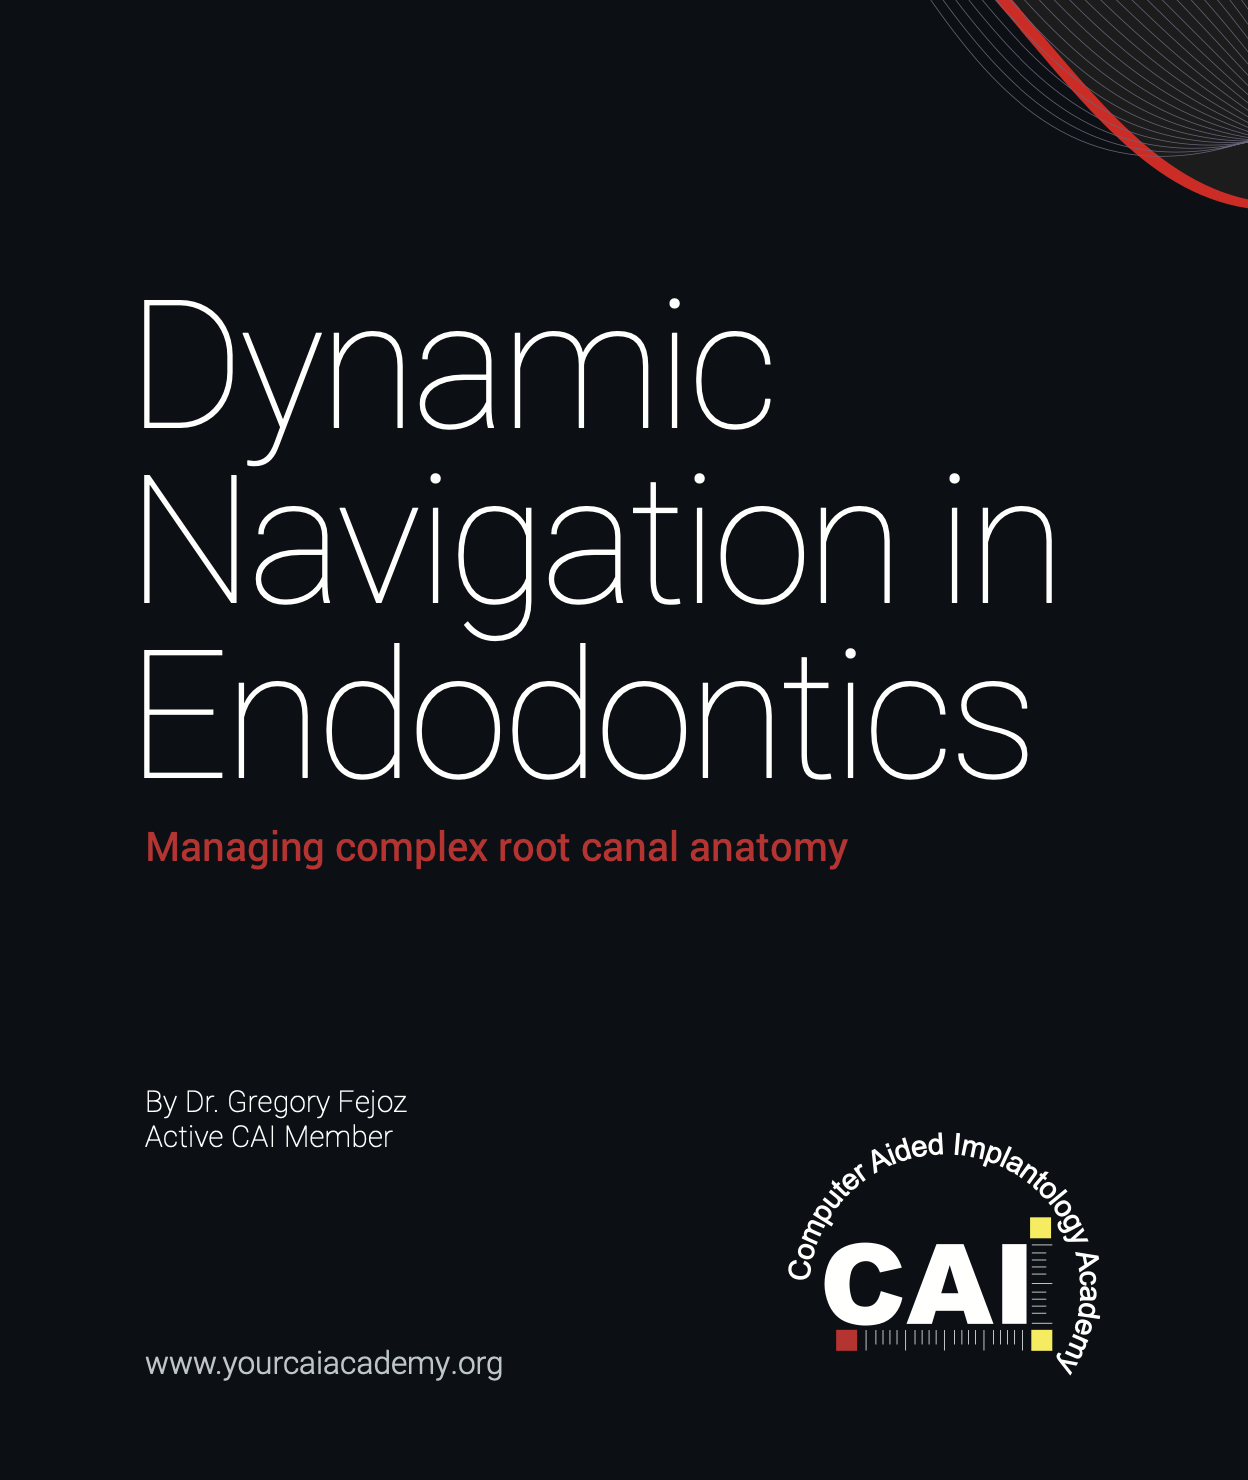 Dynamic Navigation System in Endodontics - CAI Academy